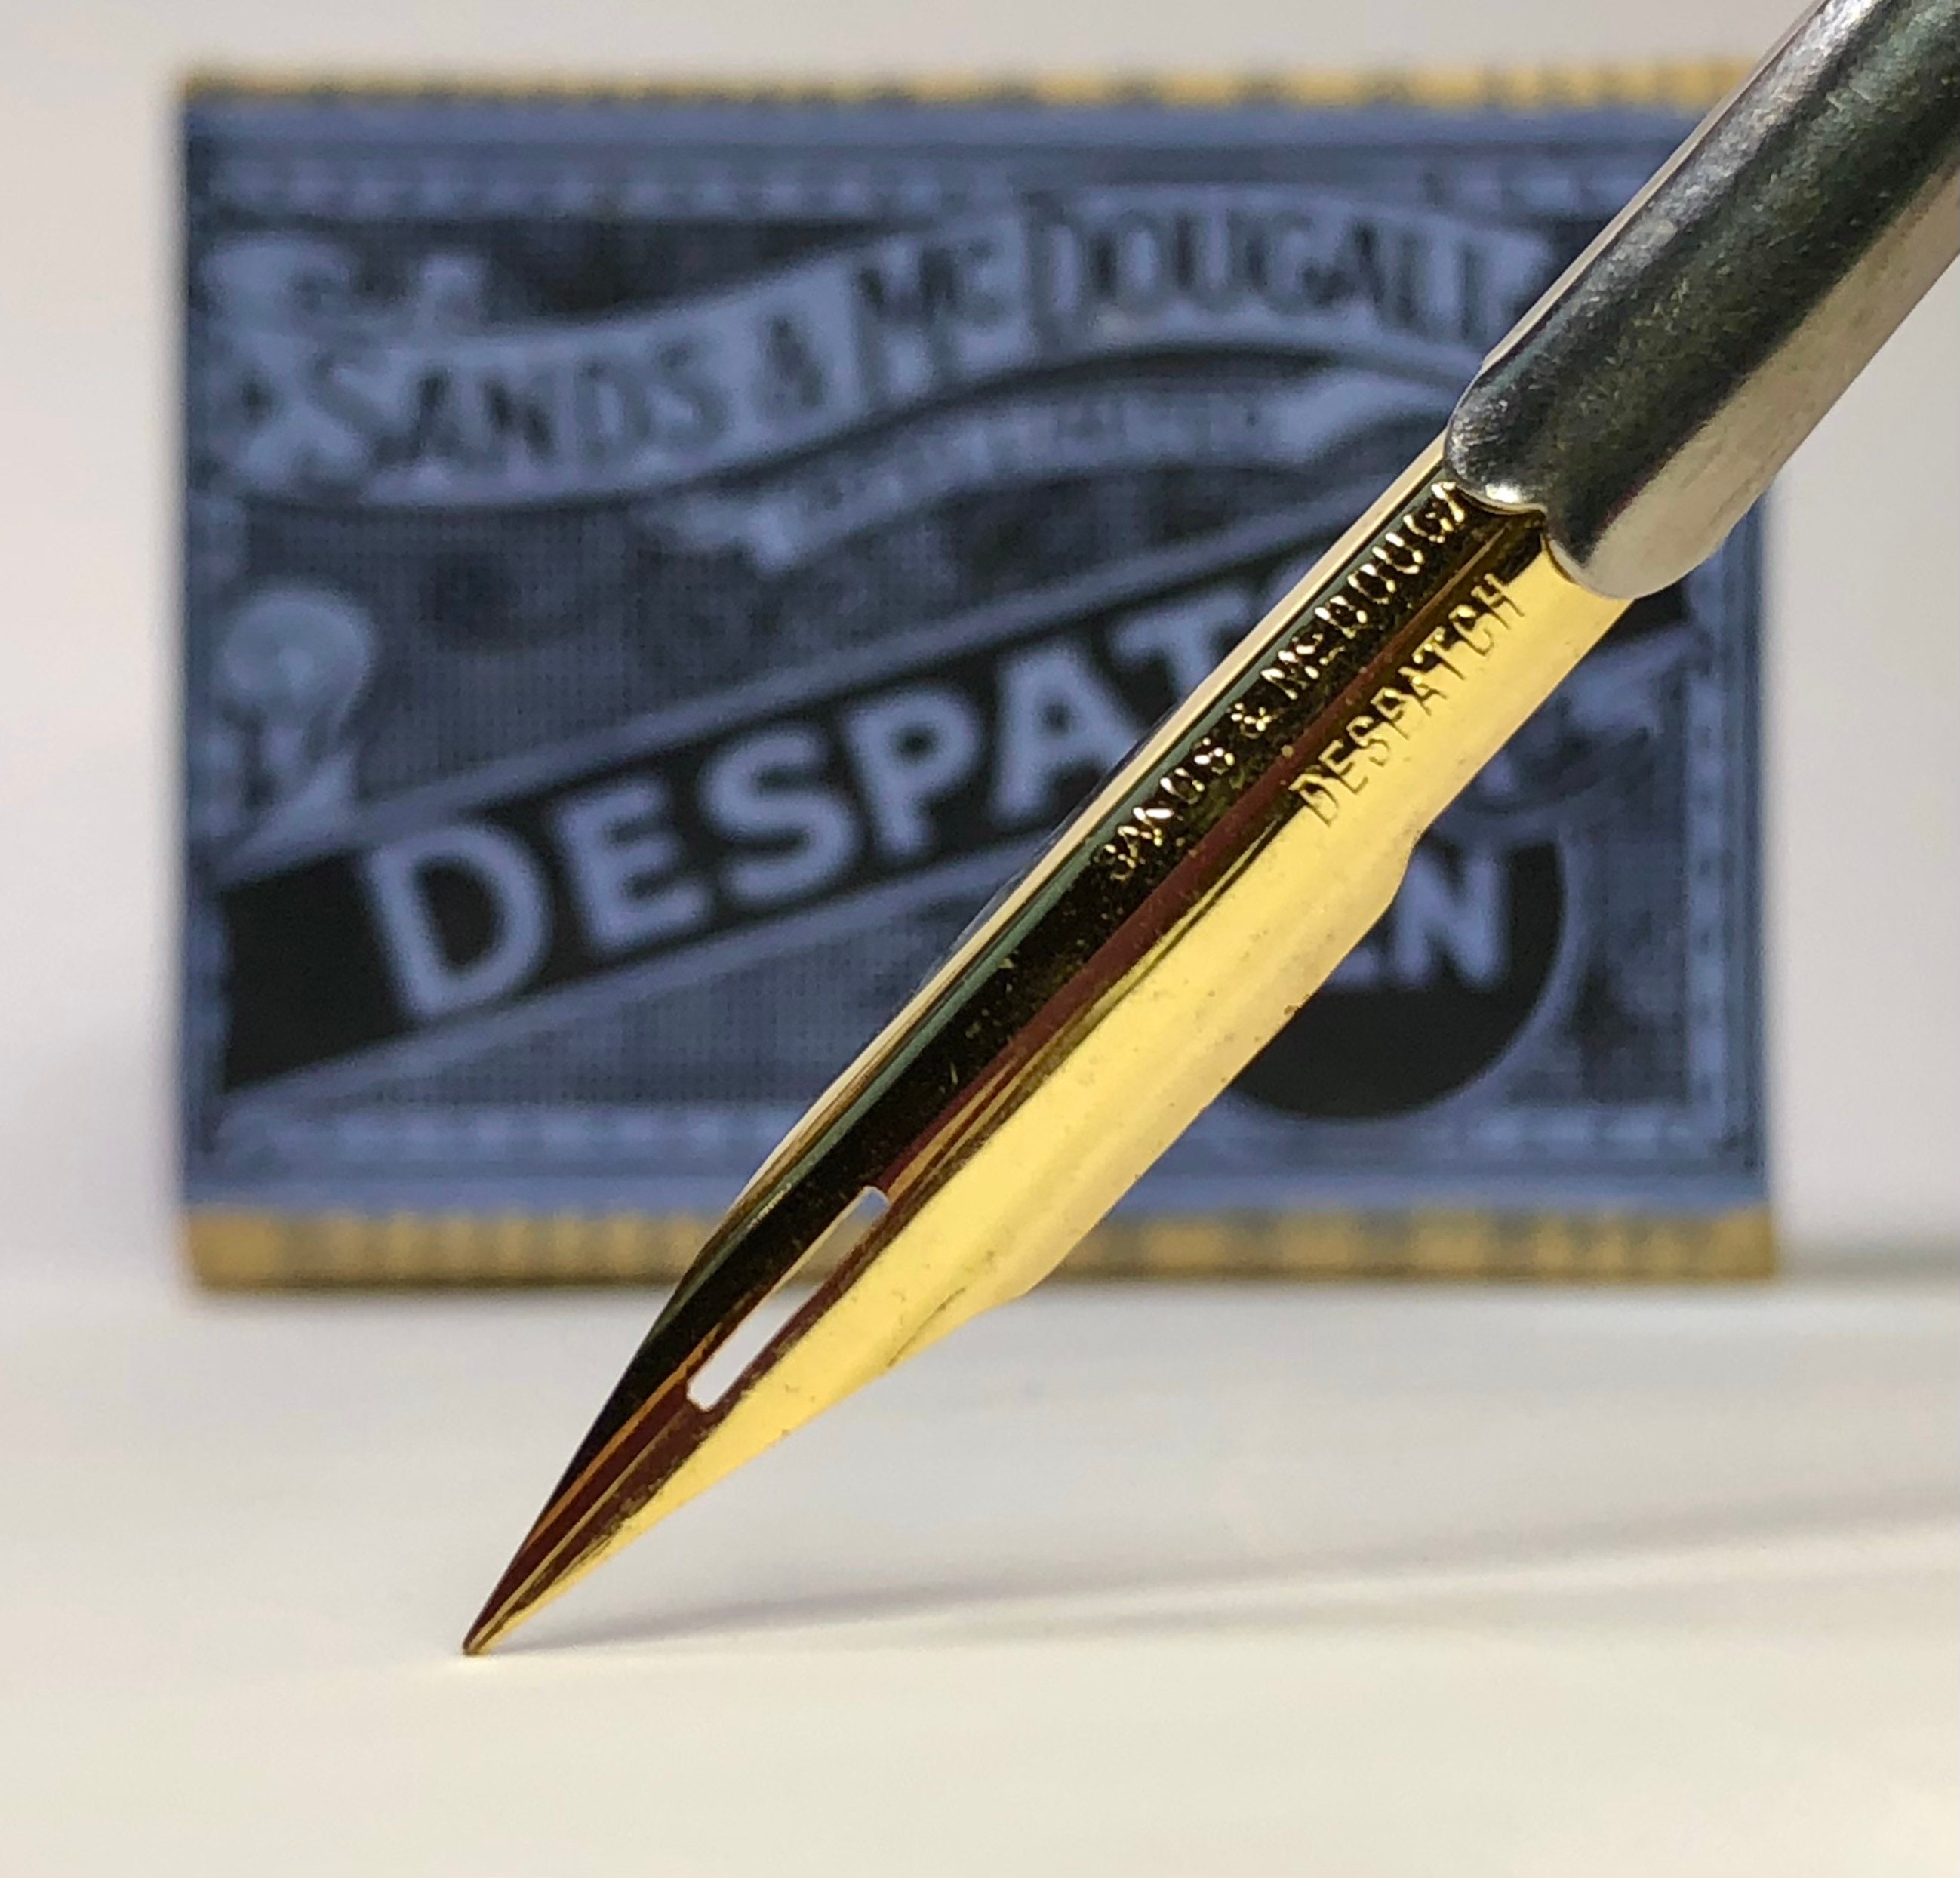 x2 Vintage Joseph Gillott's 290 Lithographic Pen Nibs for Dip Pens  Calligraphy